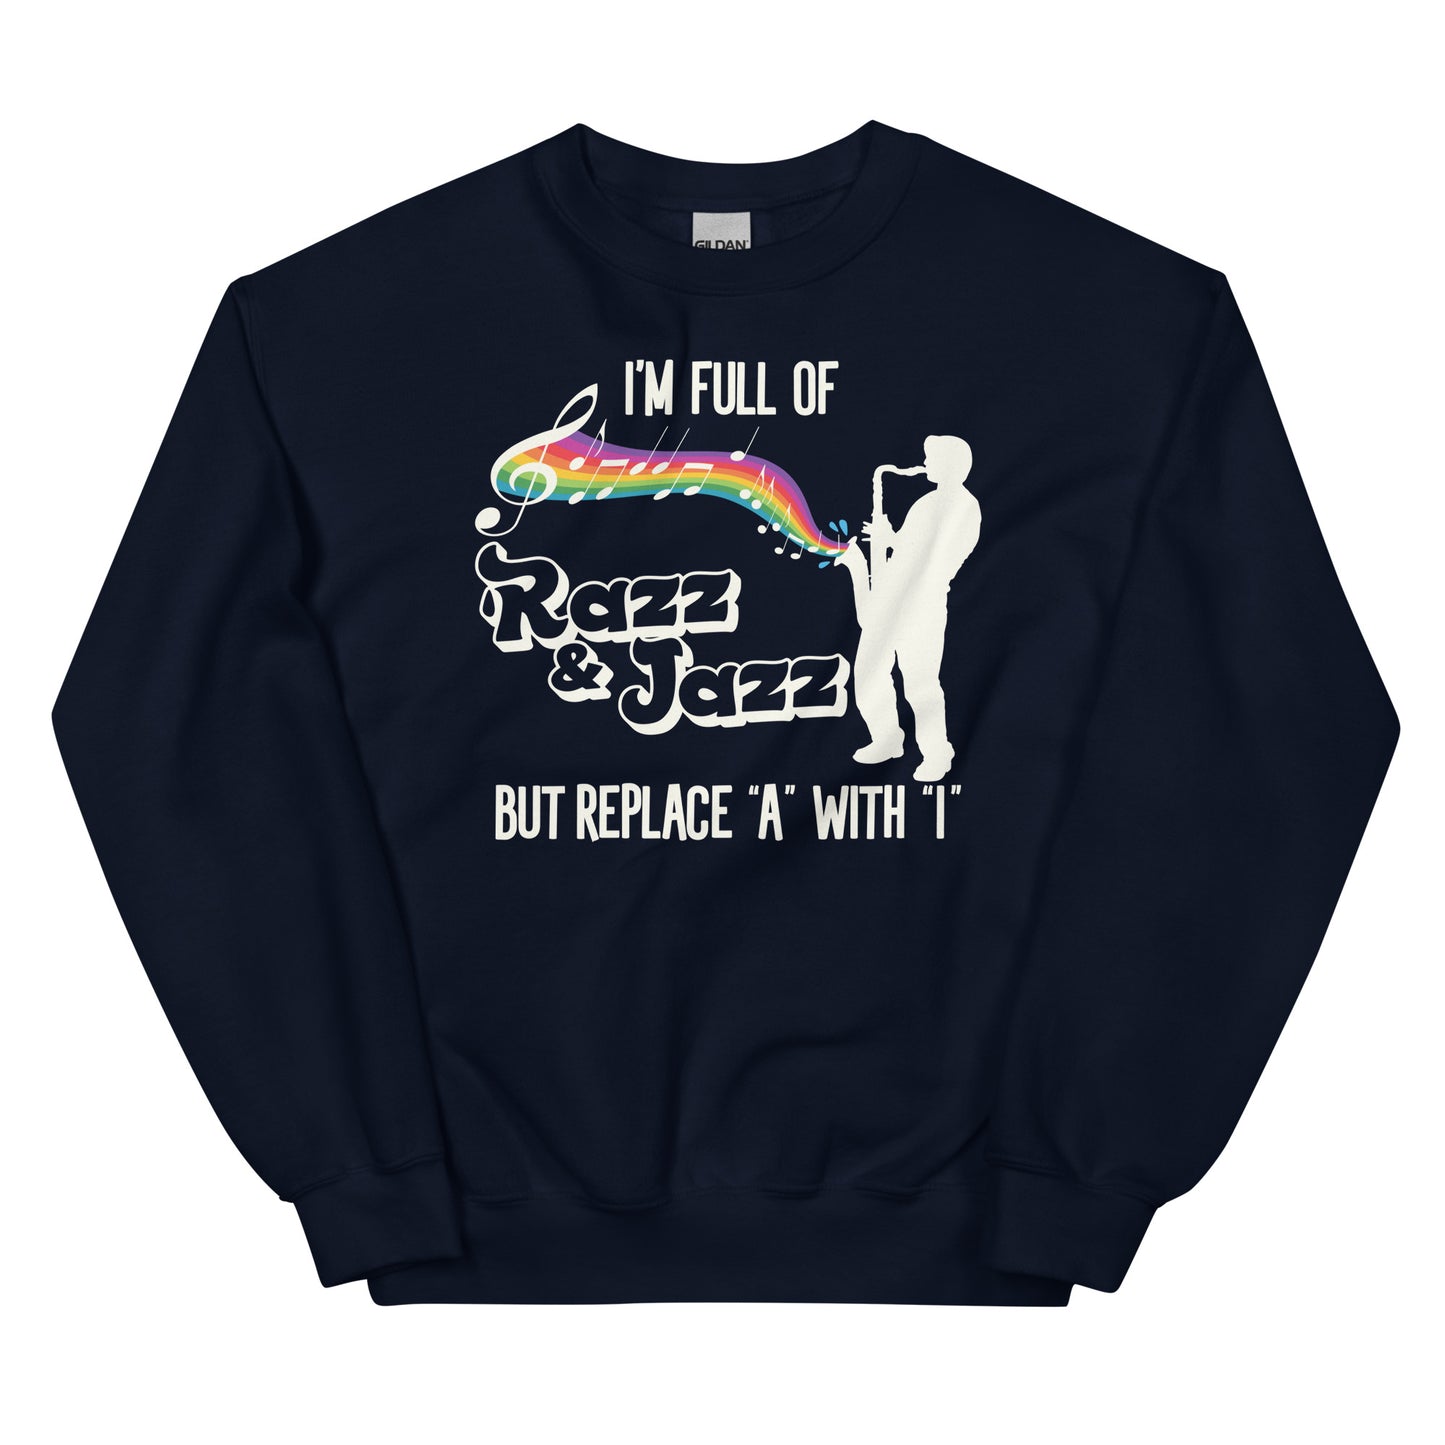 Full of Razz & Jazz Unisex Sweatshirt